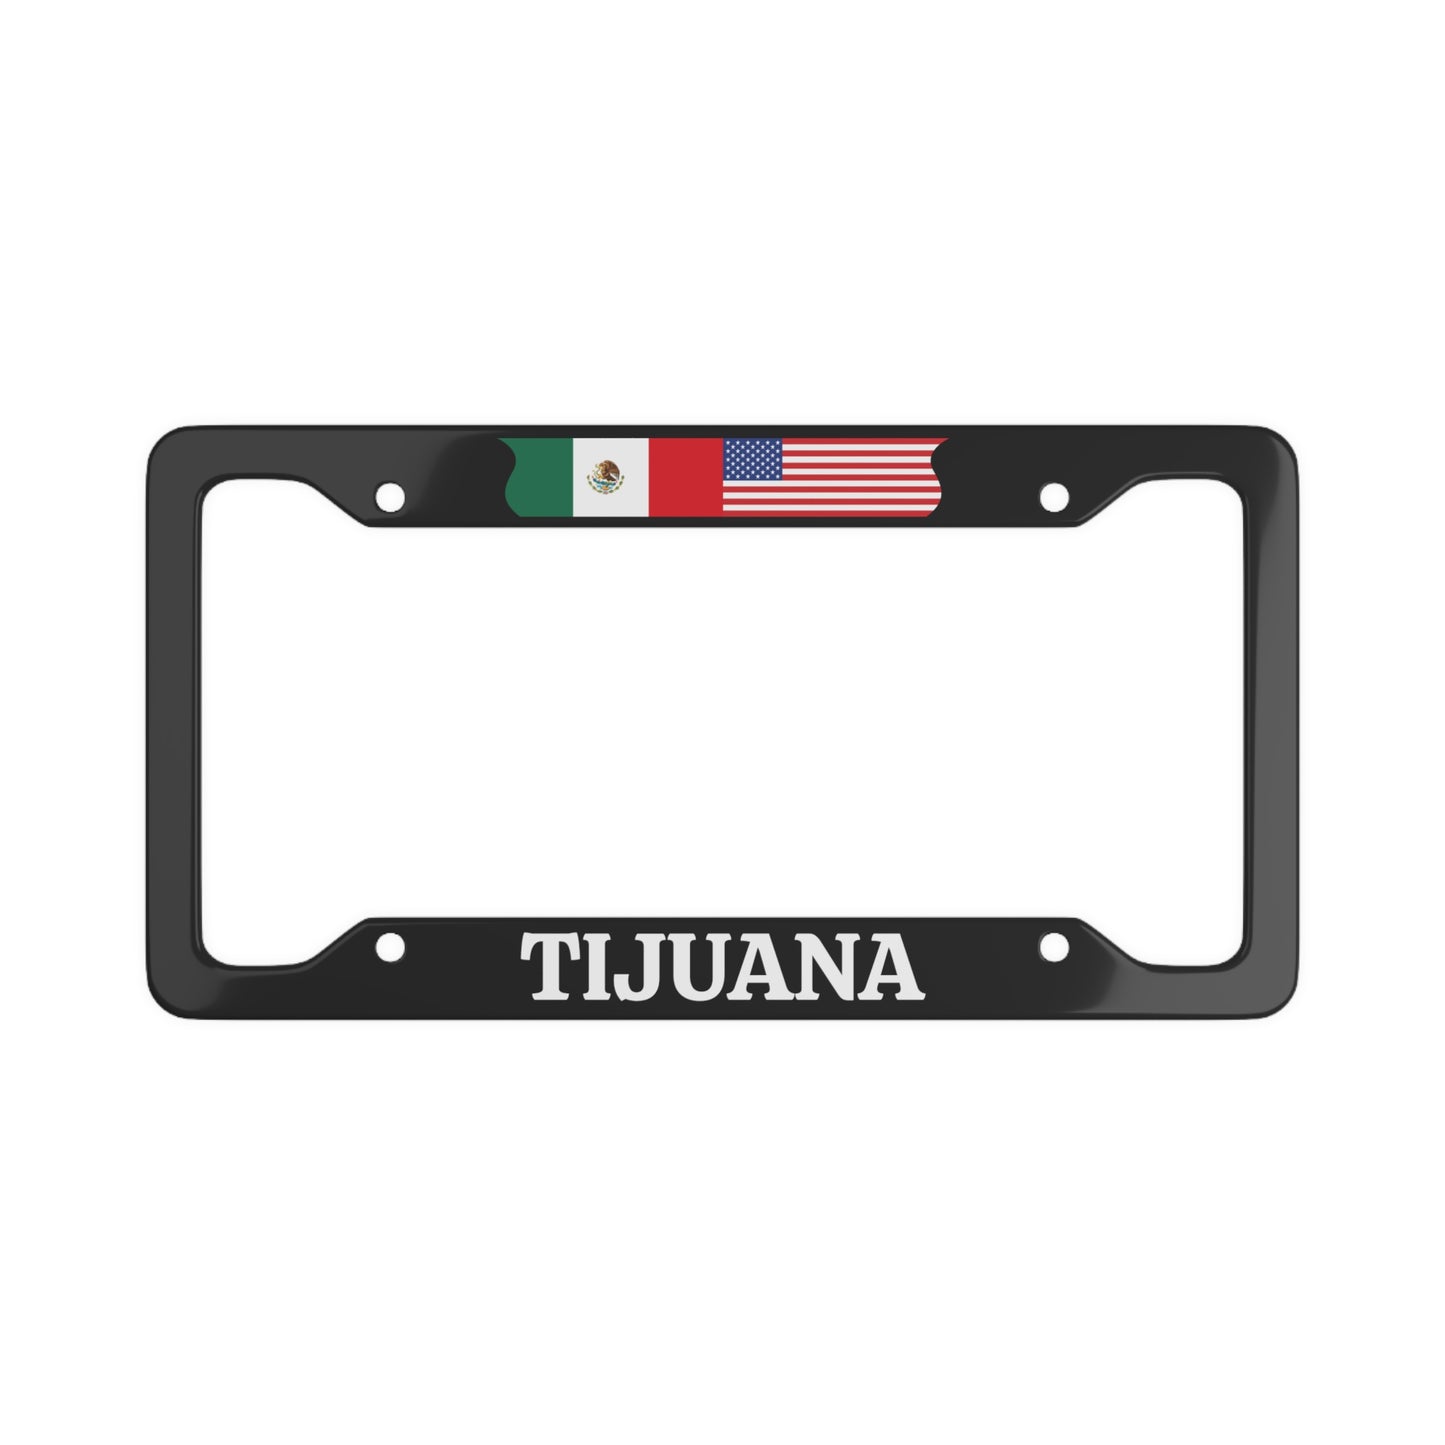 Tijuana License Plate Frame